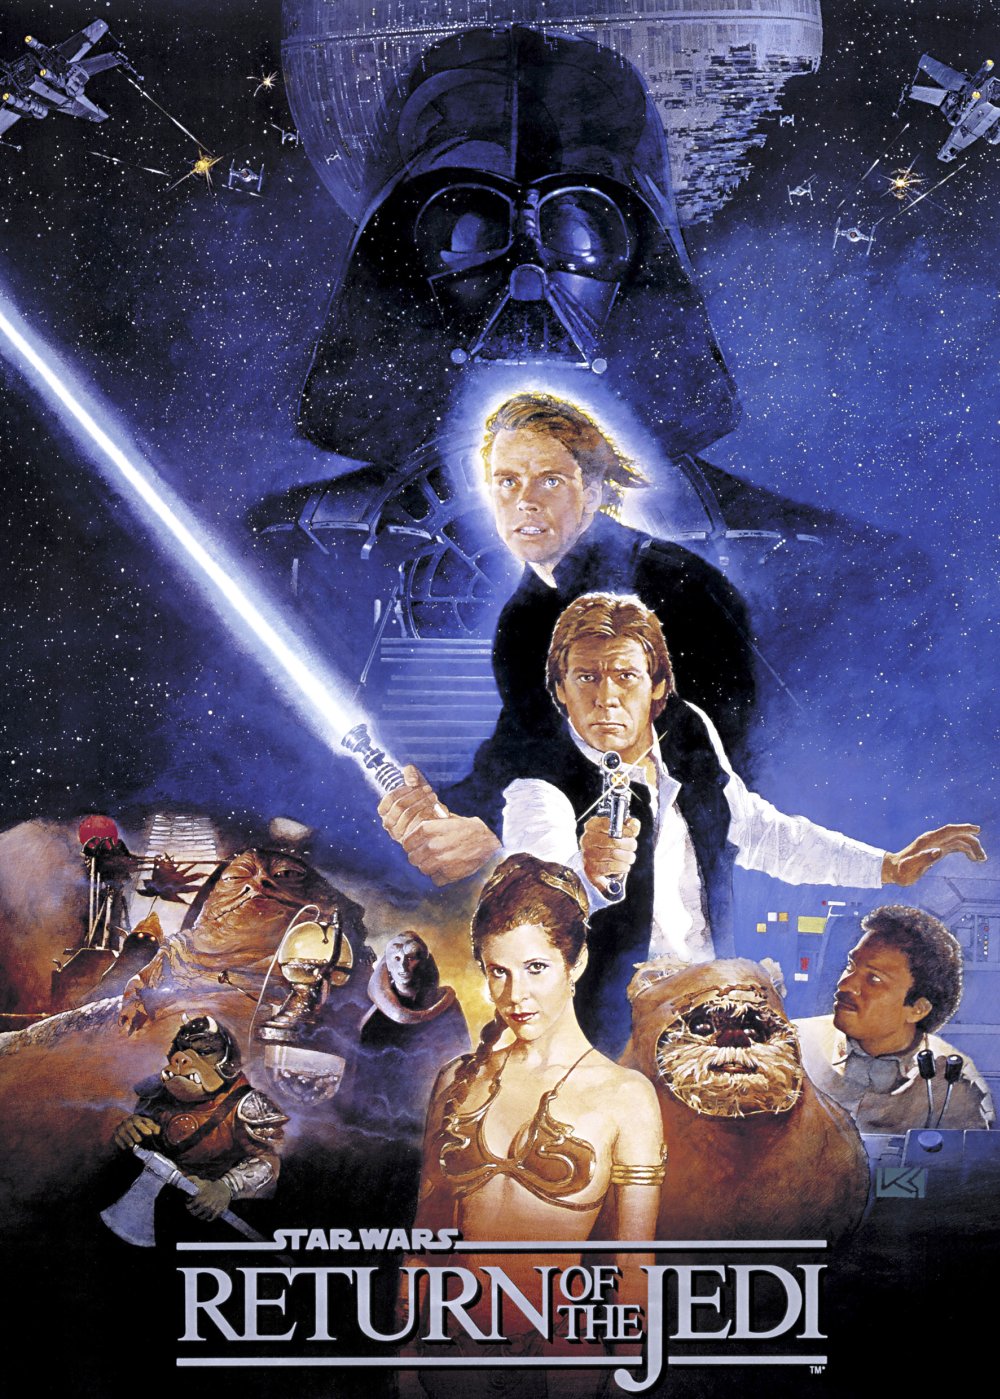 Star Wars Posters / Wallpaper | Reggie's Take.com